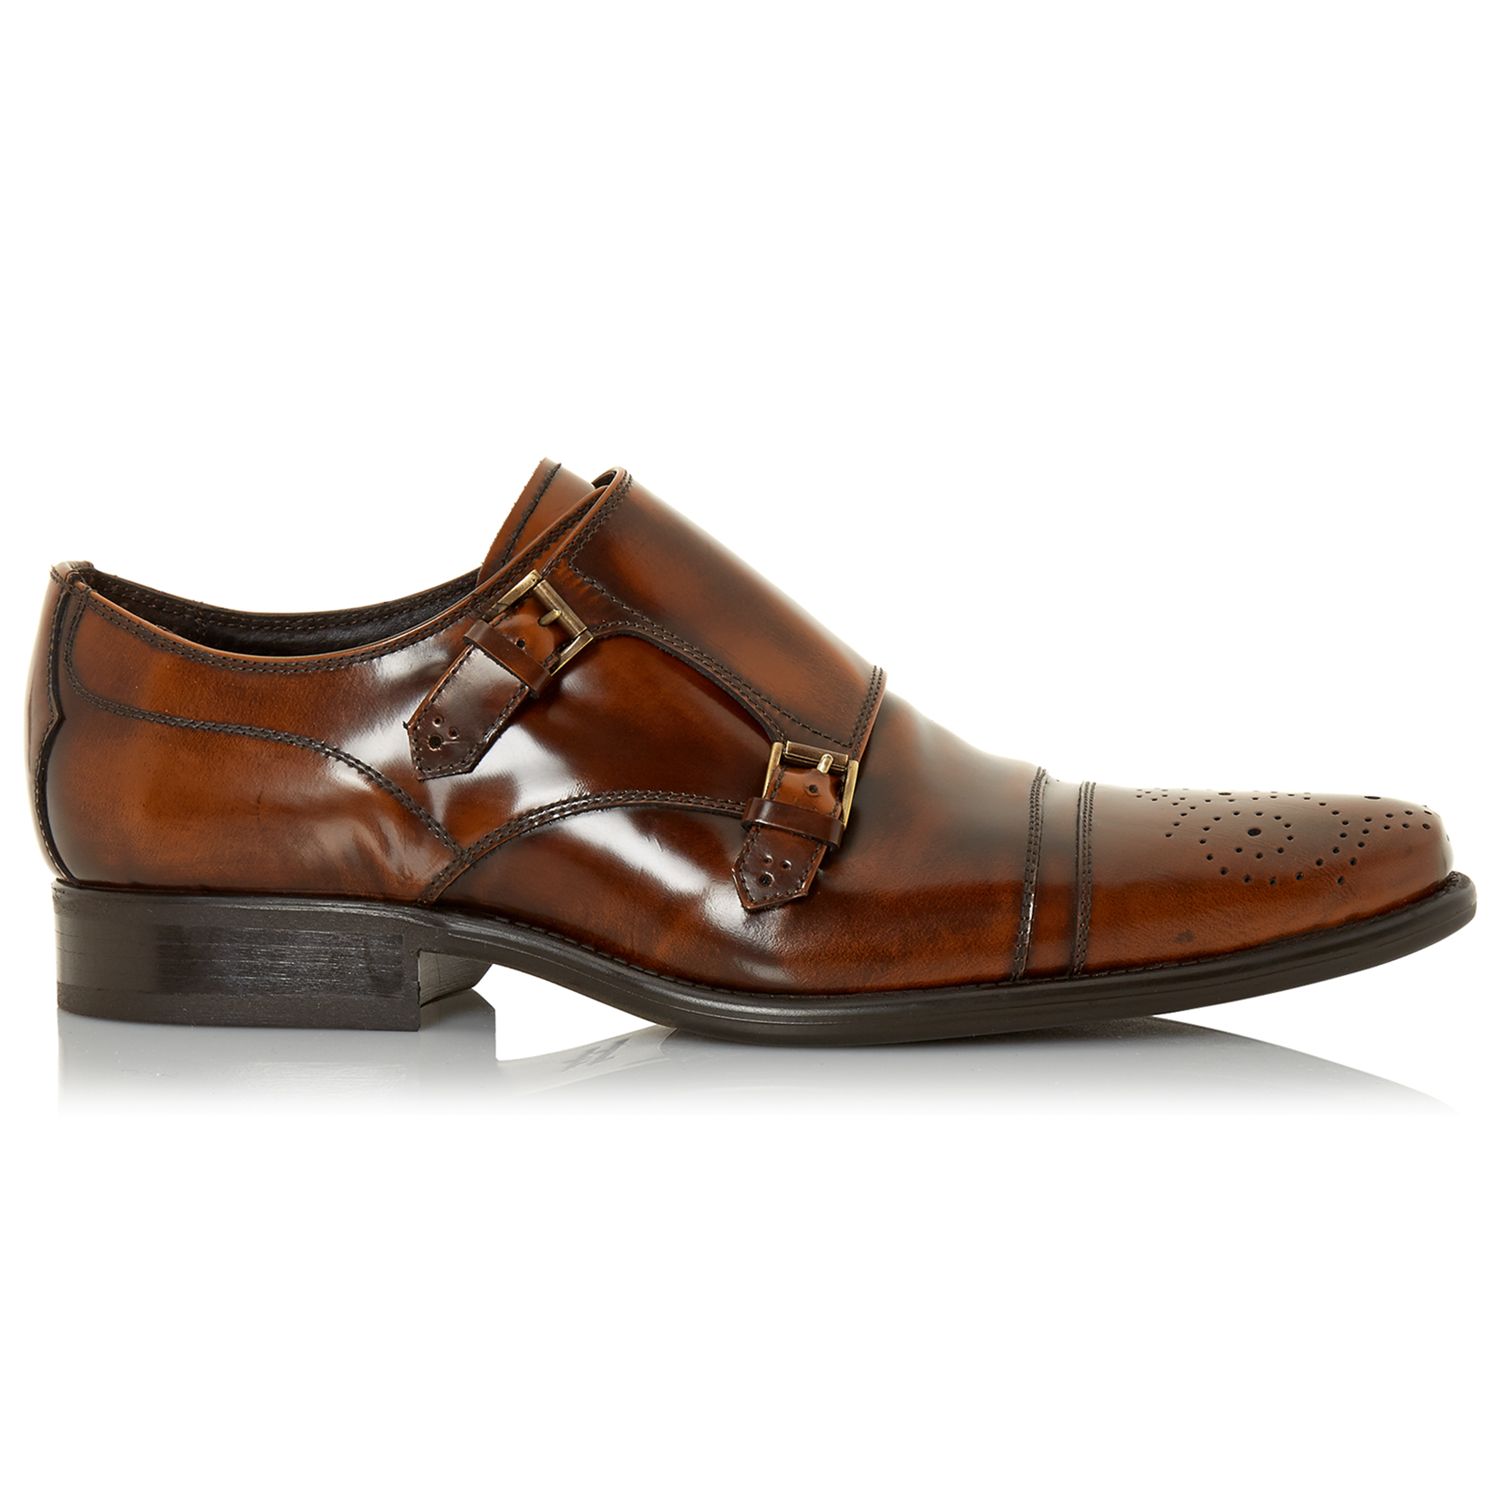 Bertie Reggi Leather Brogue Monk Shoes